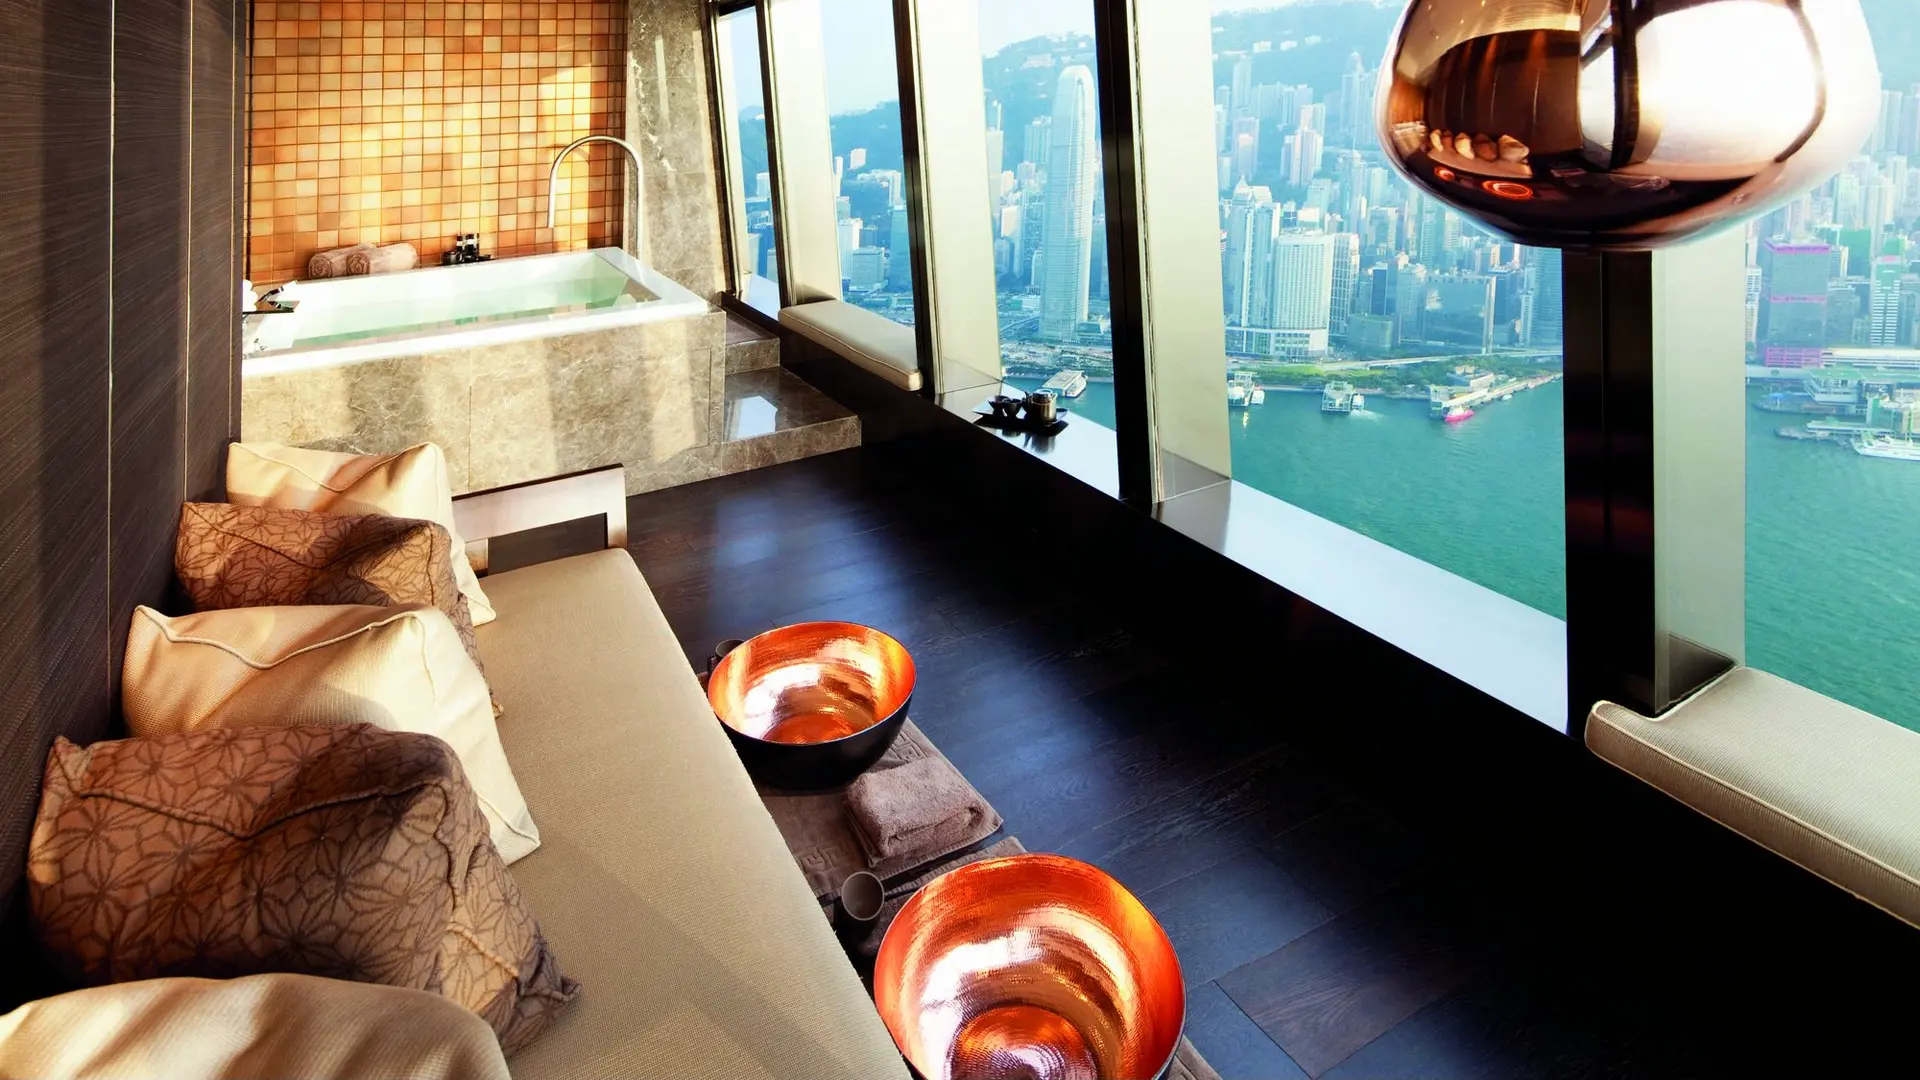 Hotel review Service & Facilities' - The Ritz-Carlton Hong Kong - 1